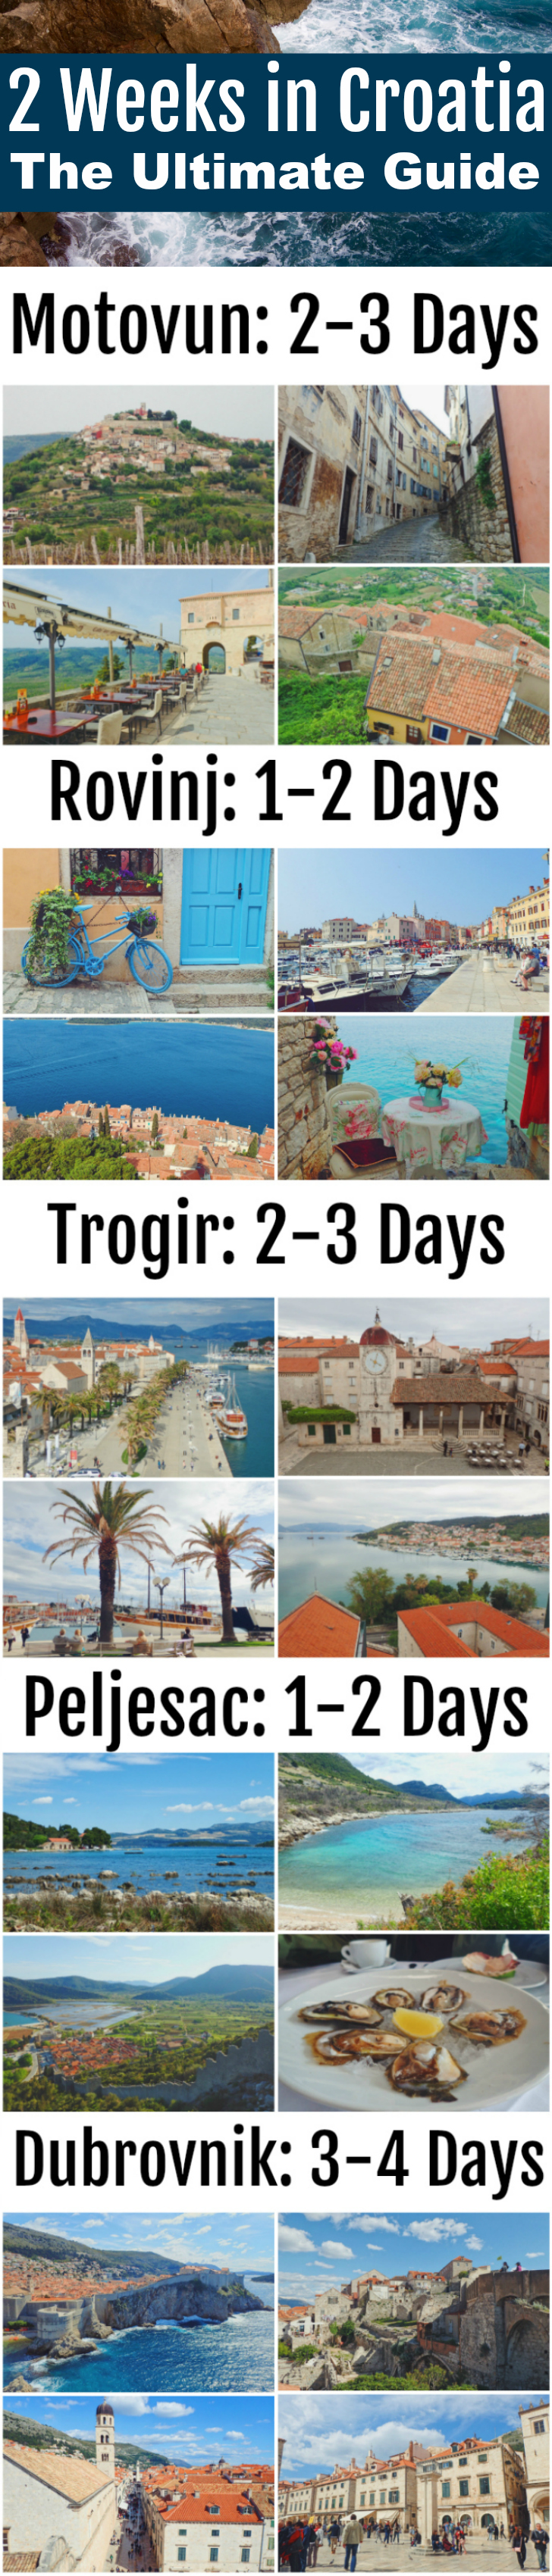 The Ultimate Guide to 2 Weeks in Croatia